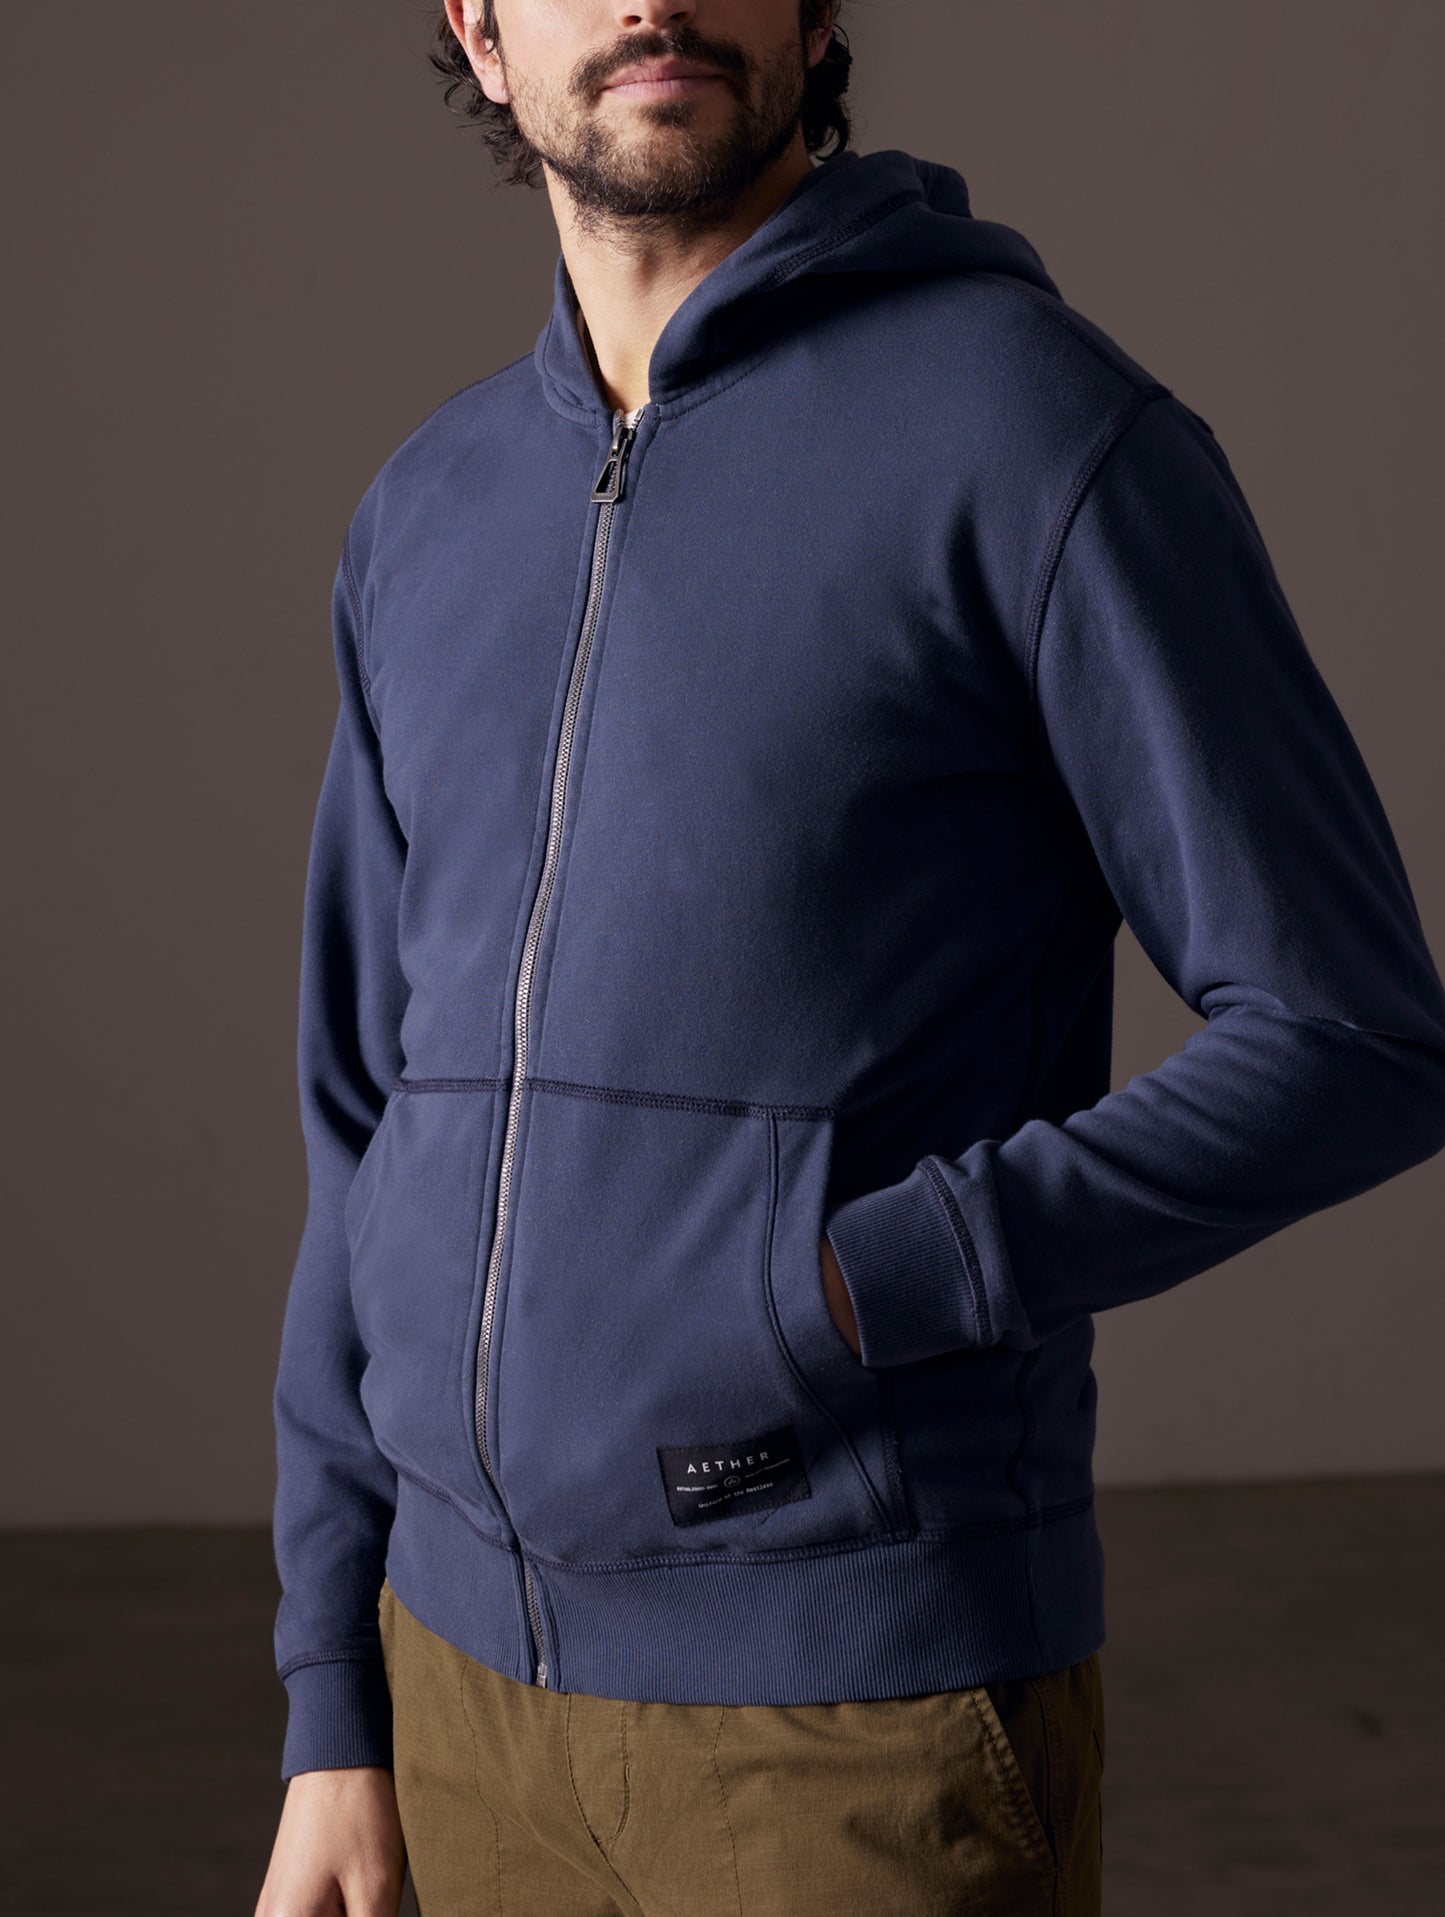 Man wearing blue full-zip hoodie from AETHER Apparel